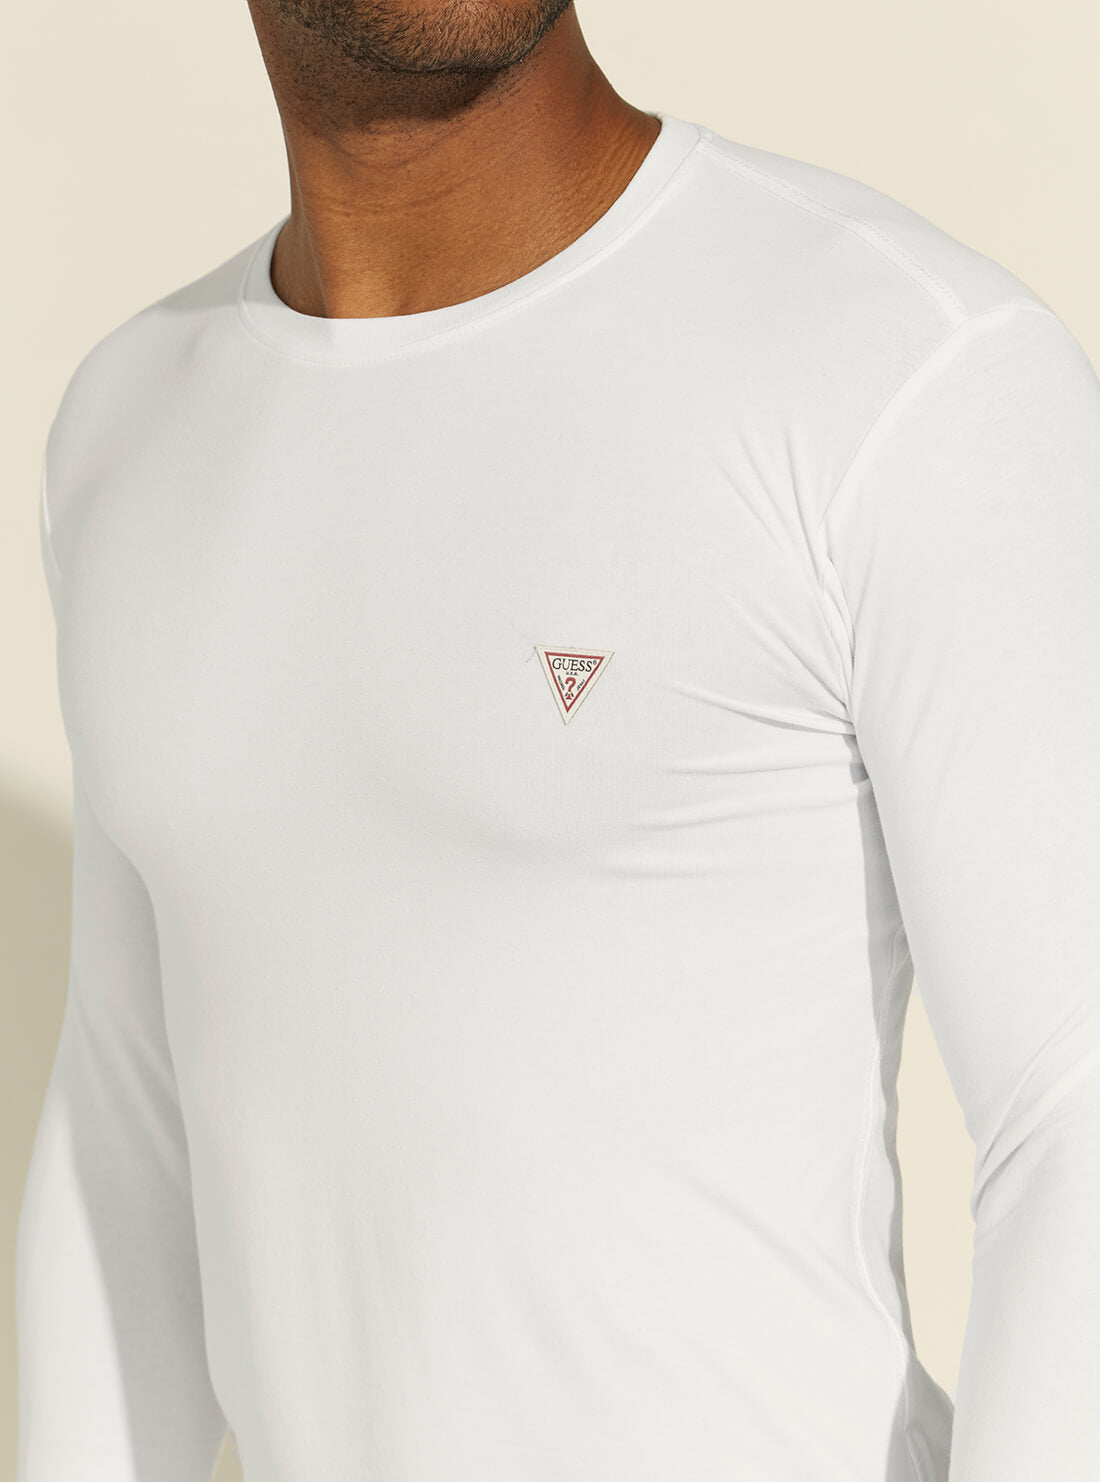 GUESS Mens White Super Slim Long Sleeve T-Shirt M1RI28J1311 Detail View